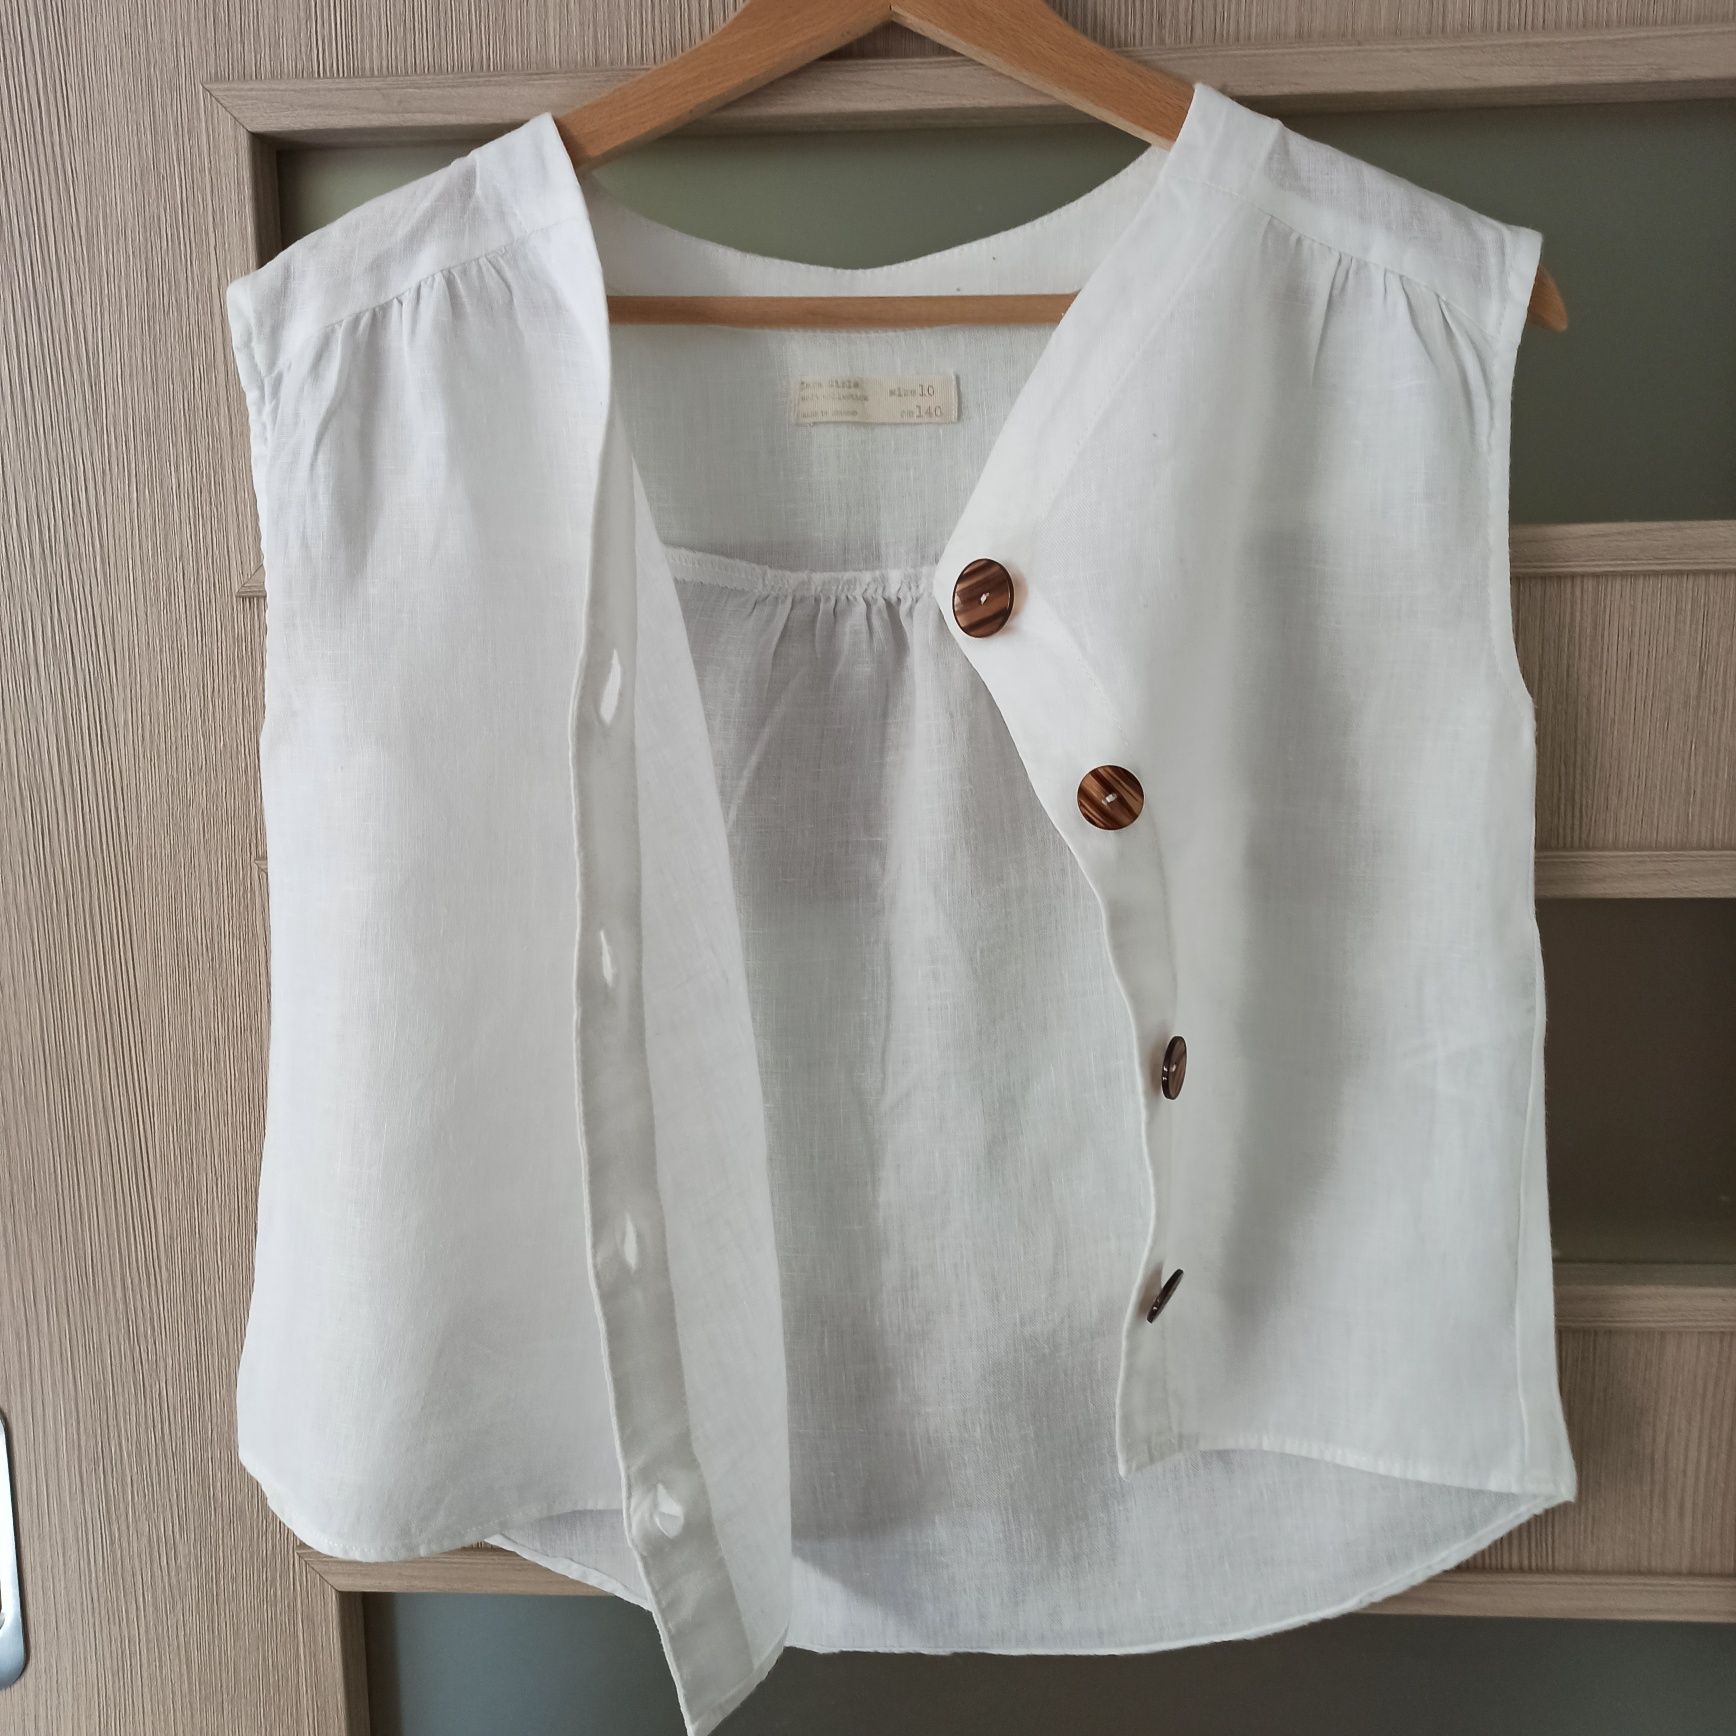 Koszula, bluzka, marki Zara, rozmiar 140 cm, 10 lat. Len